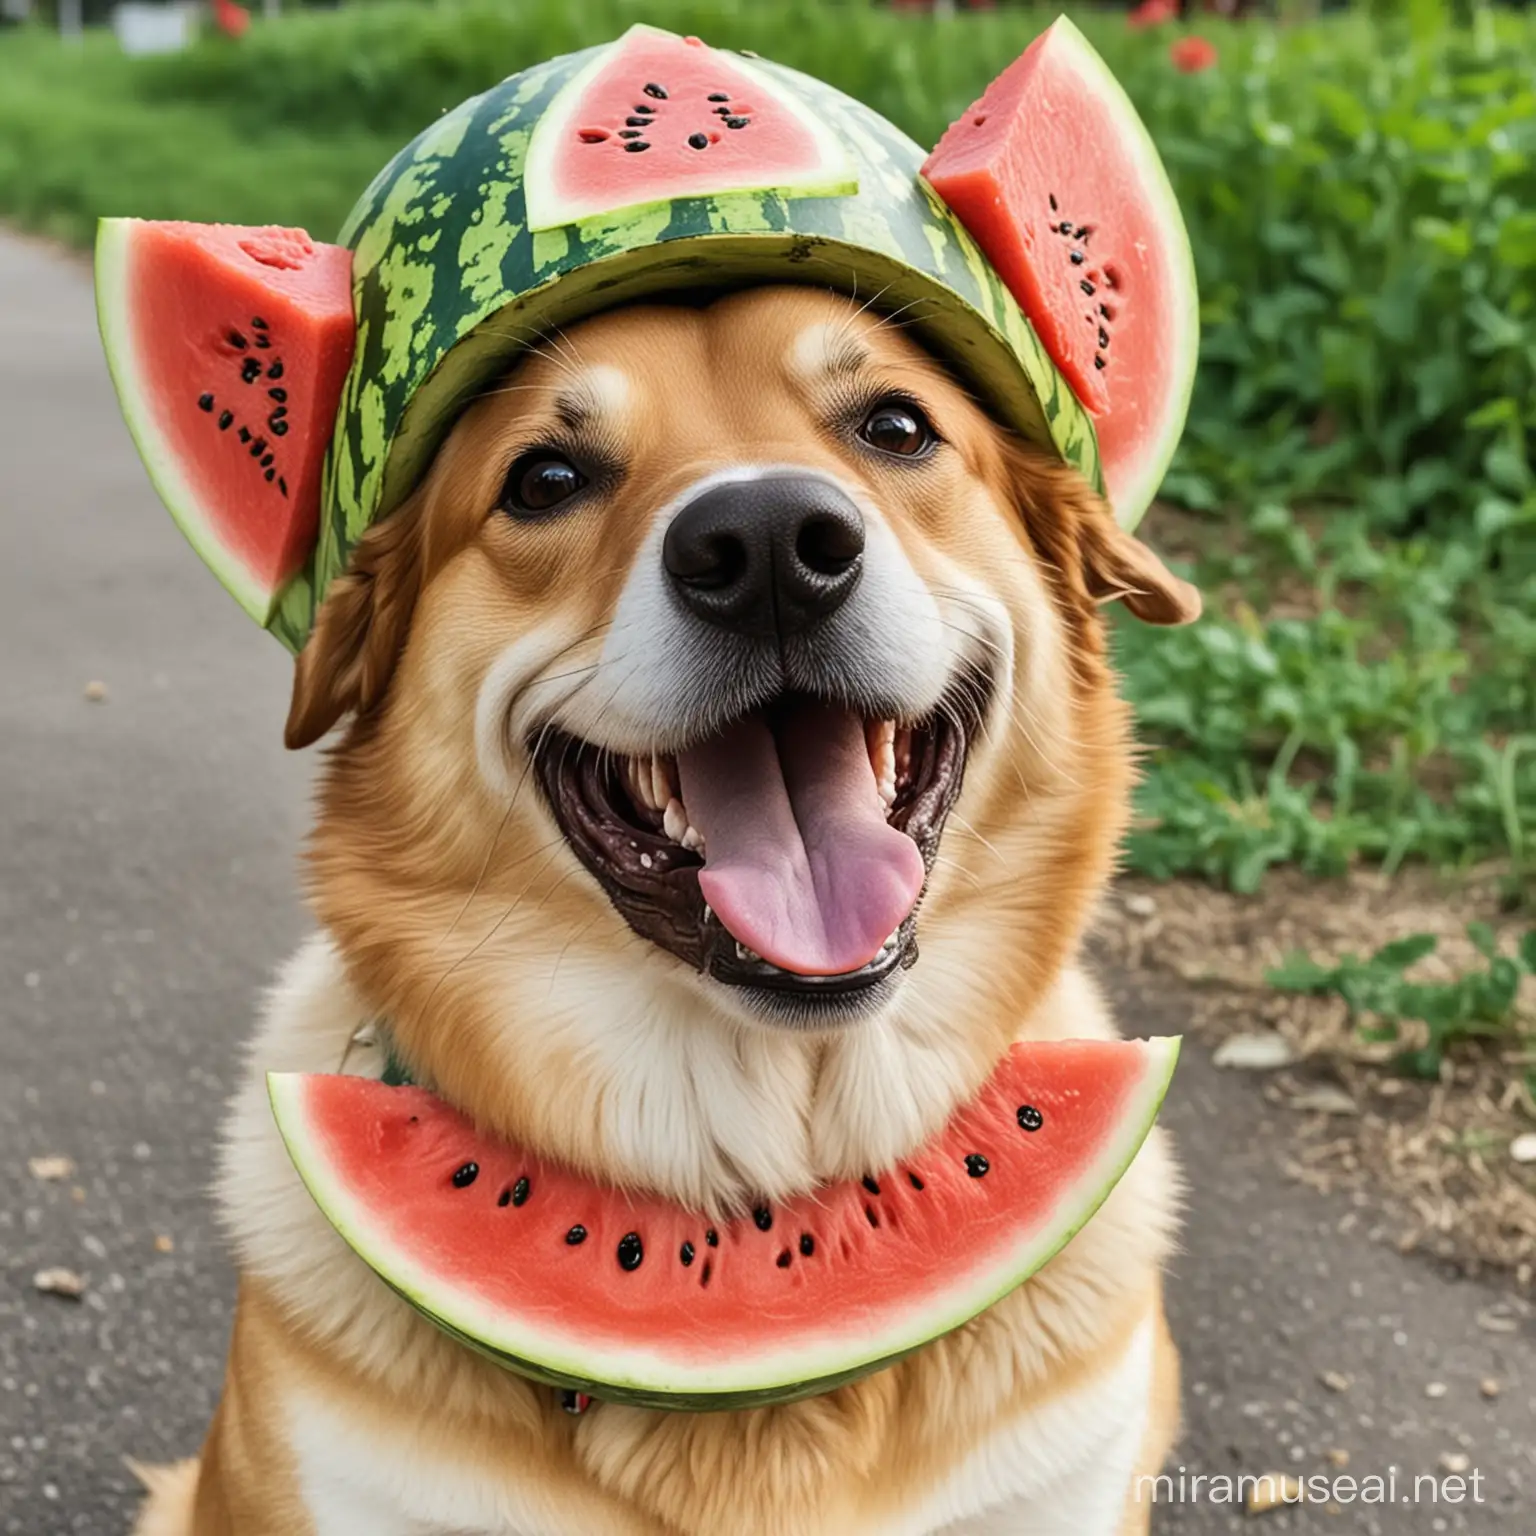 Joyful Canine in a Vibrant Watermelon Helmet